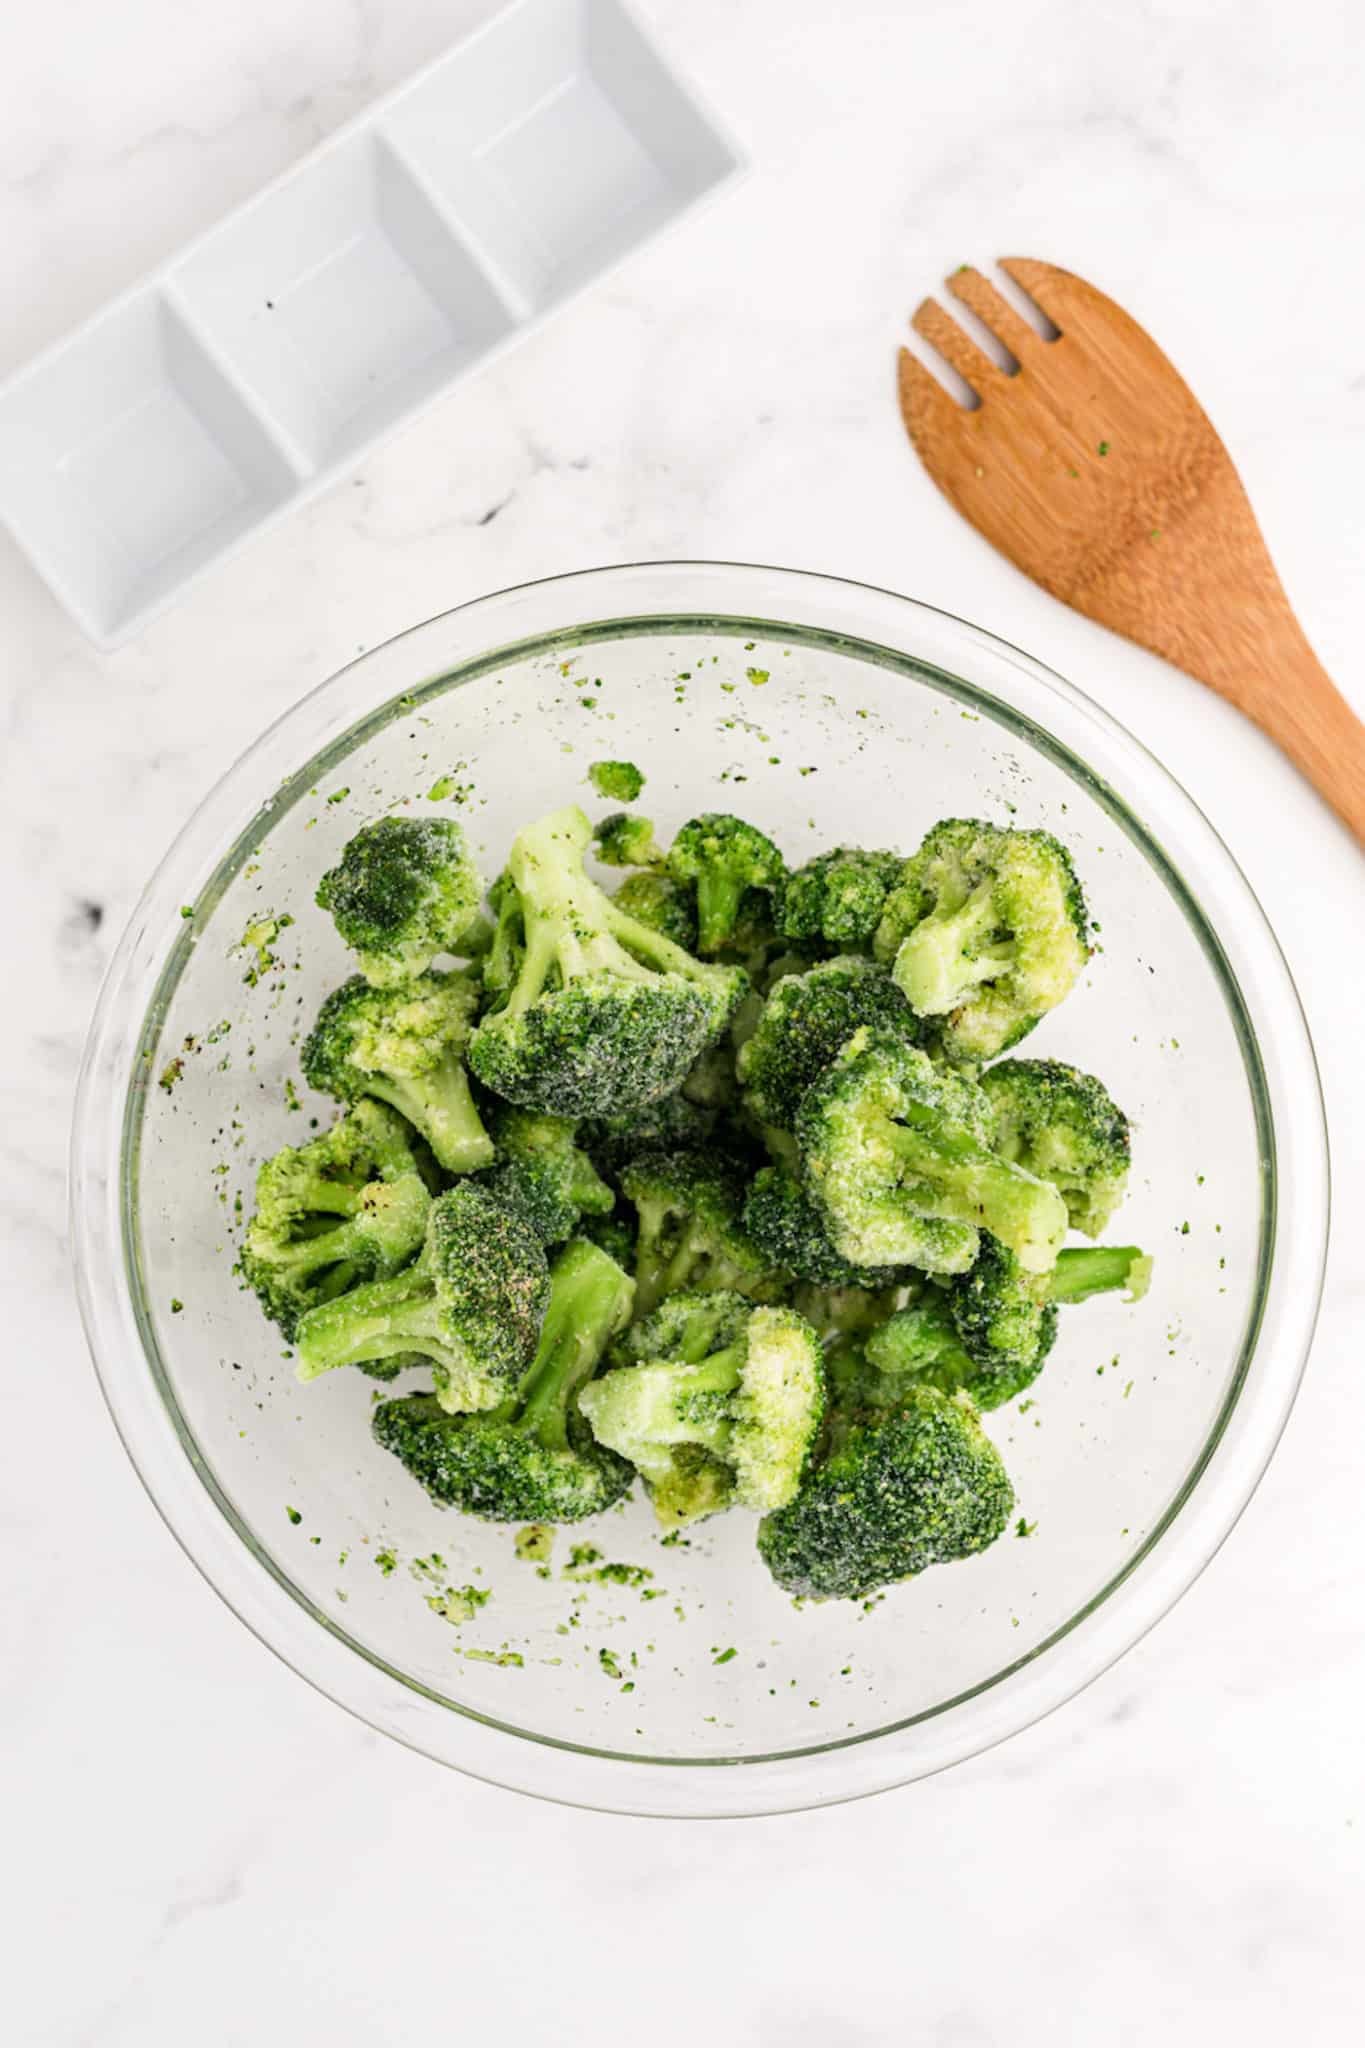 seasoned broccoli in a bowl.